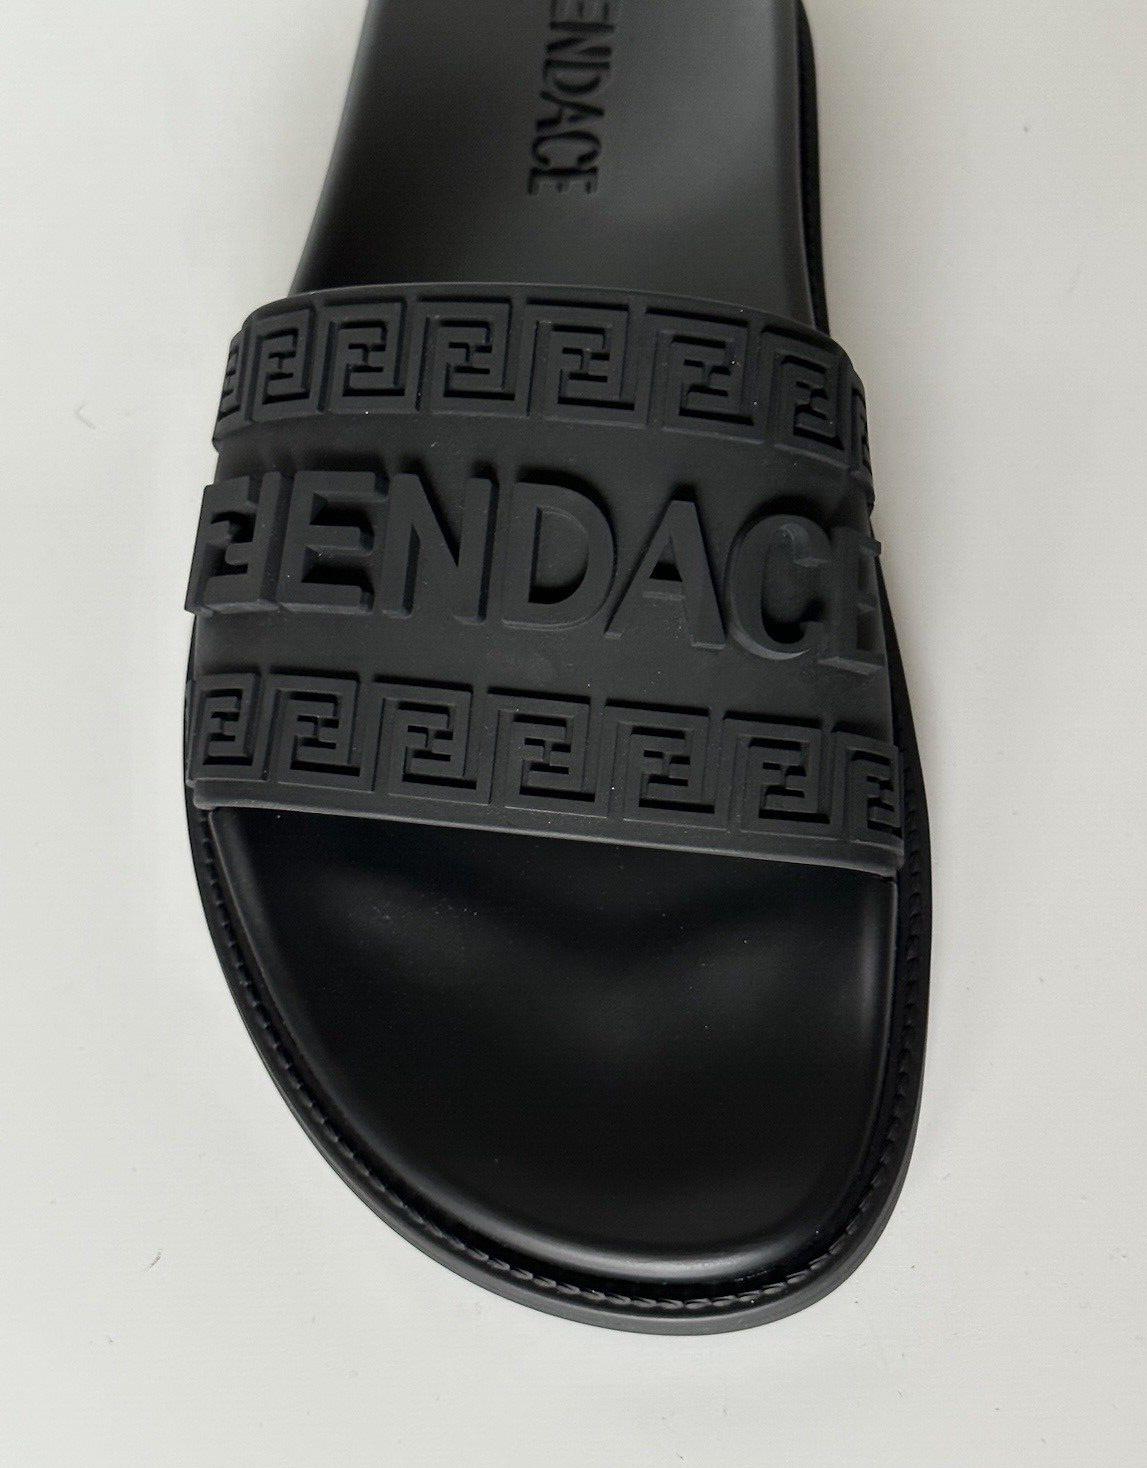 NIB $ 520 Fendace Fendi&amp;Versace Slide-Sandalen aus Gummi Schwarz 12 US/11 UK IT 7X1551 